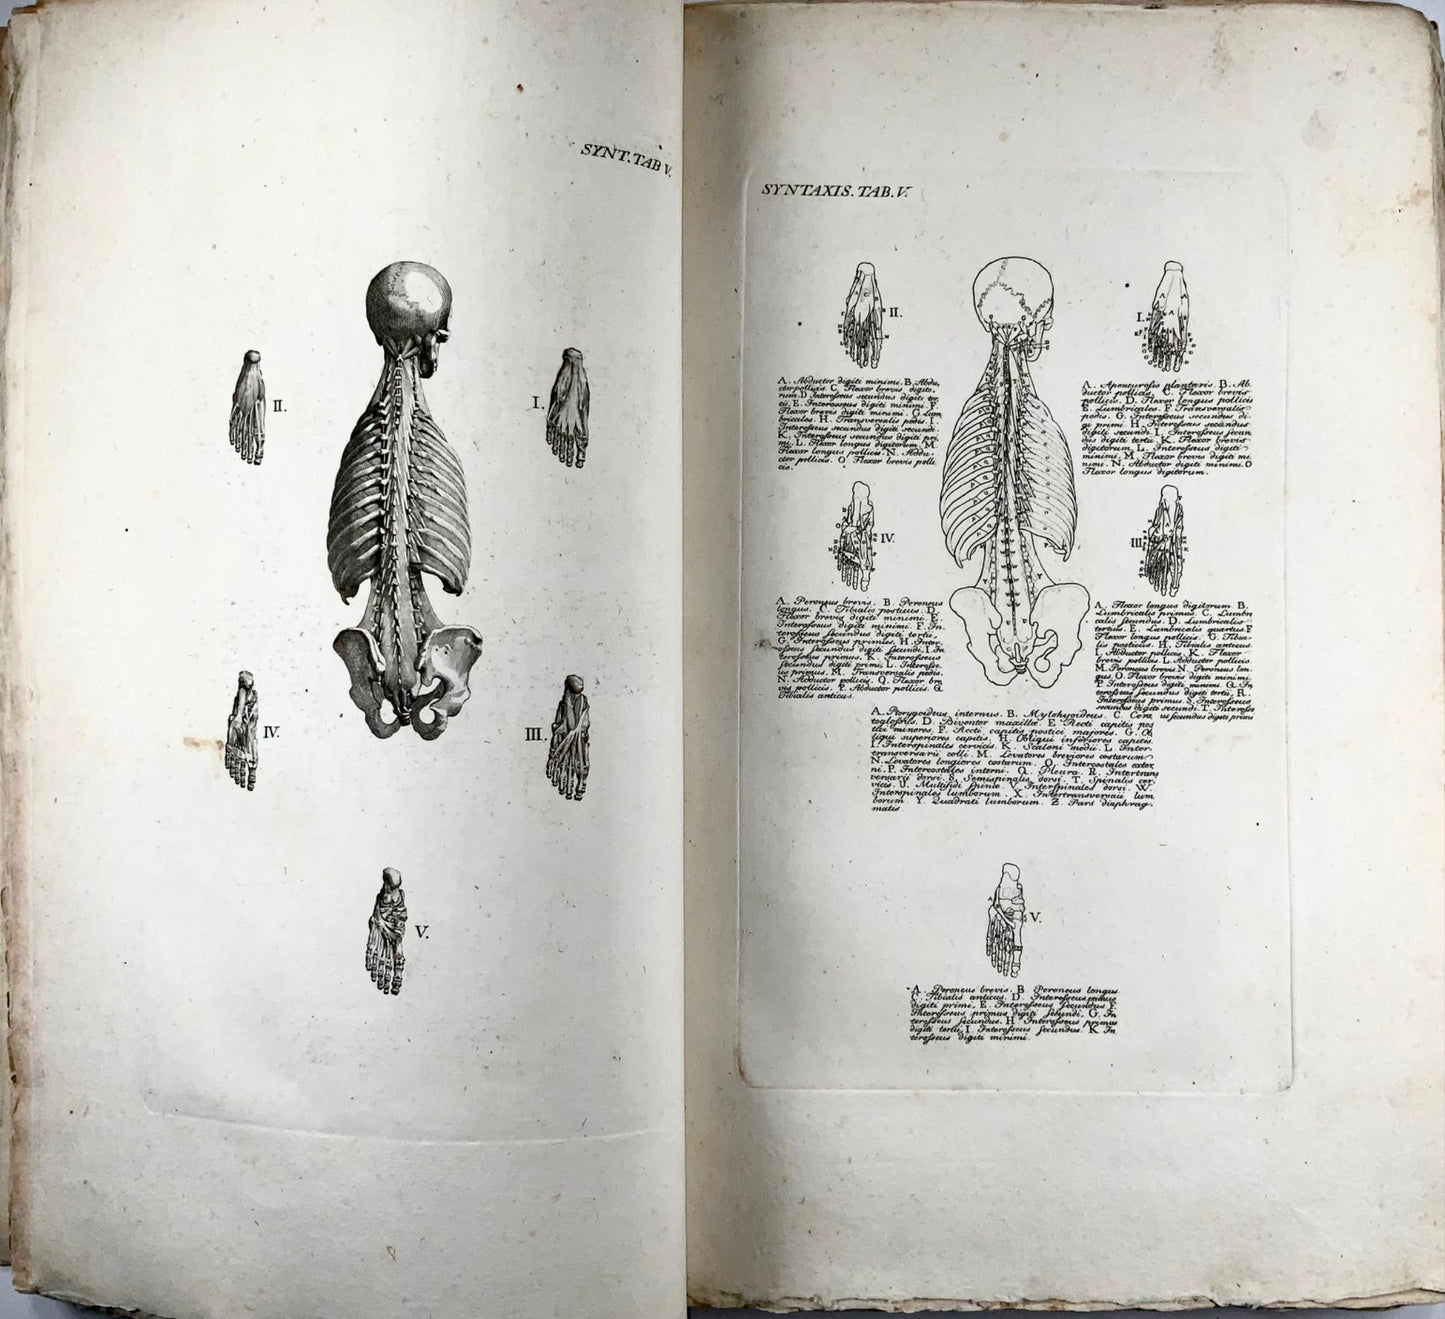 1819 J. Barth, Anfangsgründe der Muskellehre, folio, 61 gravures sur cuivre, médecine, livre, anatomie